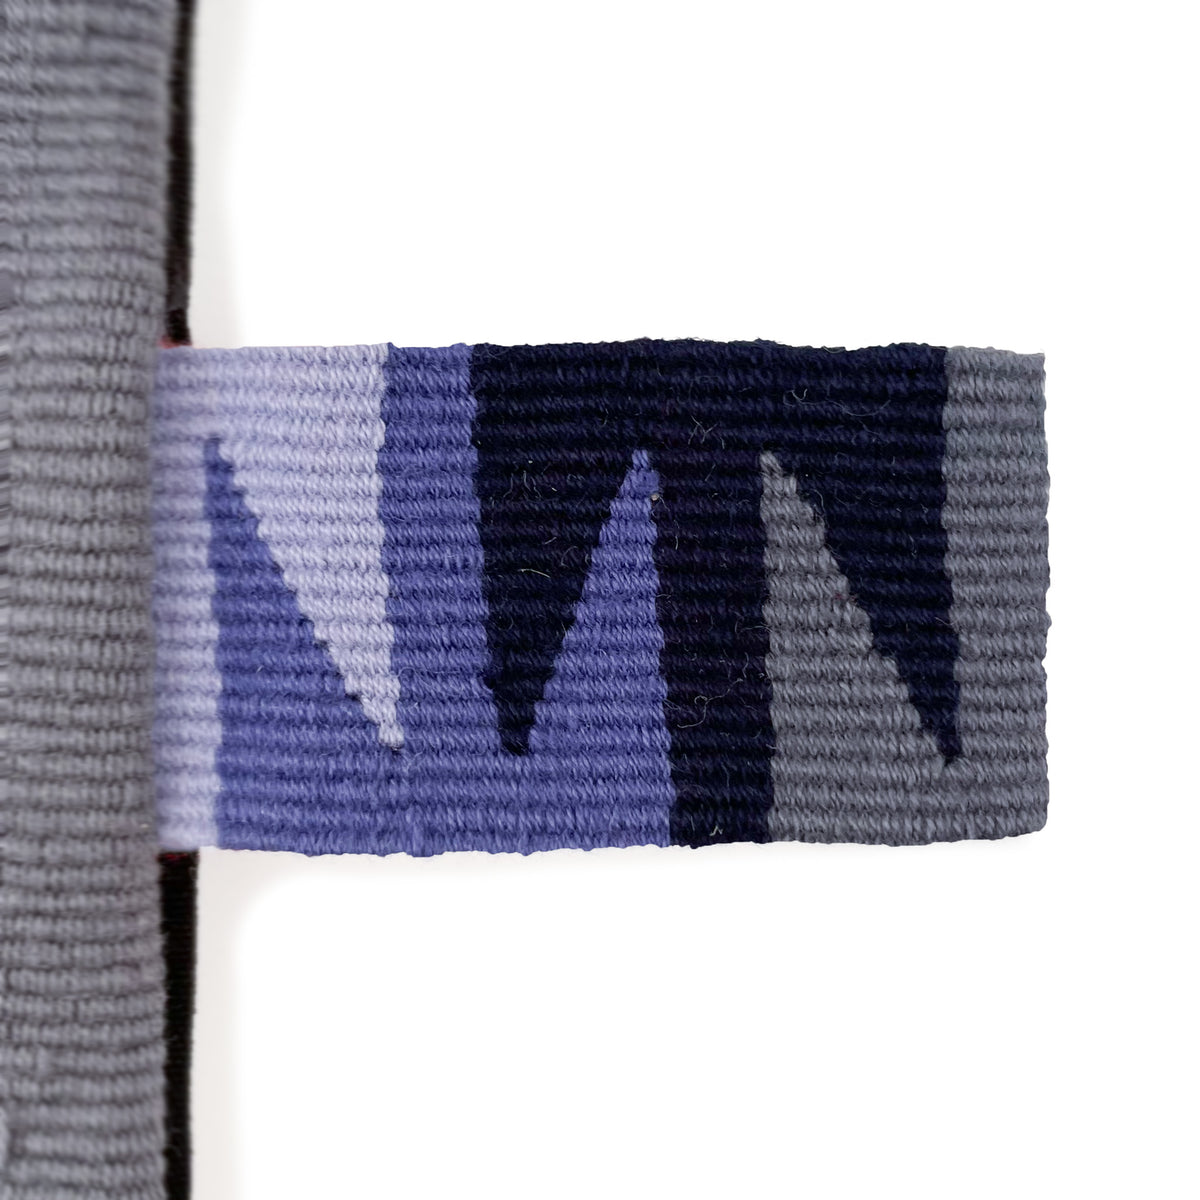 Closeup of cinta tag in blue and grey tones